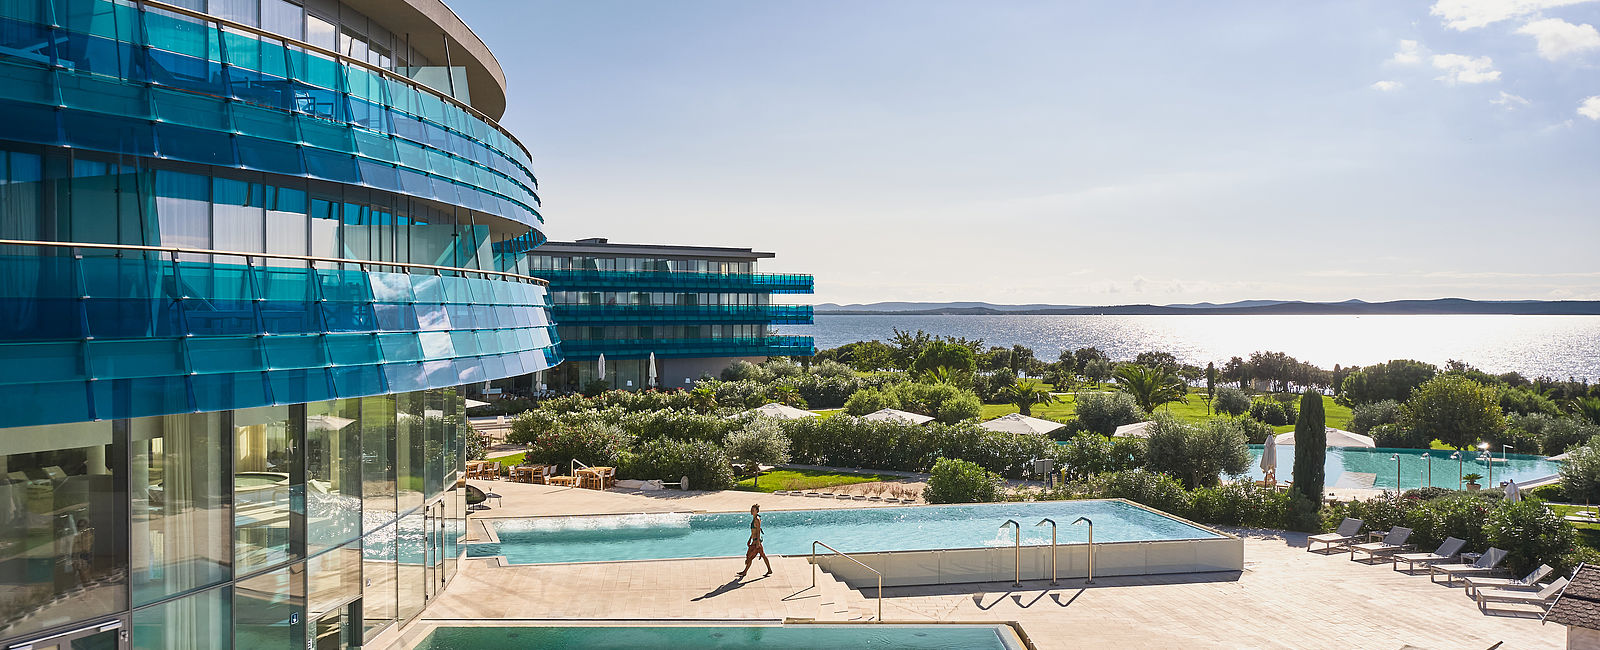 HOTEL ANGEBOTE
 Falkensteiner Resort Punta Skala: -15%  
